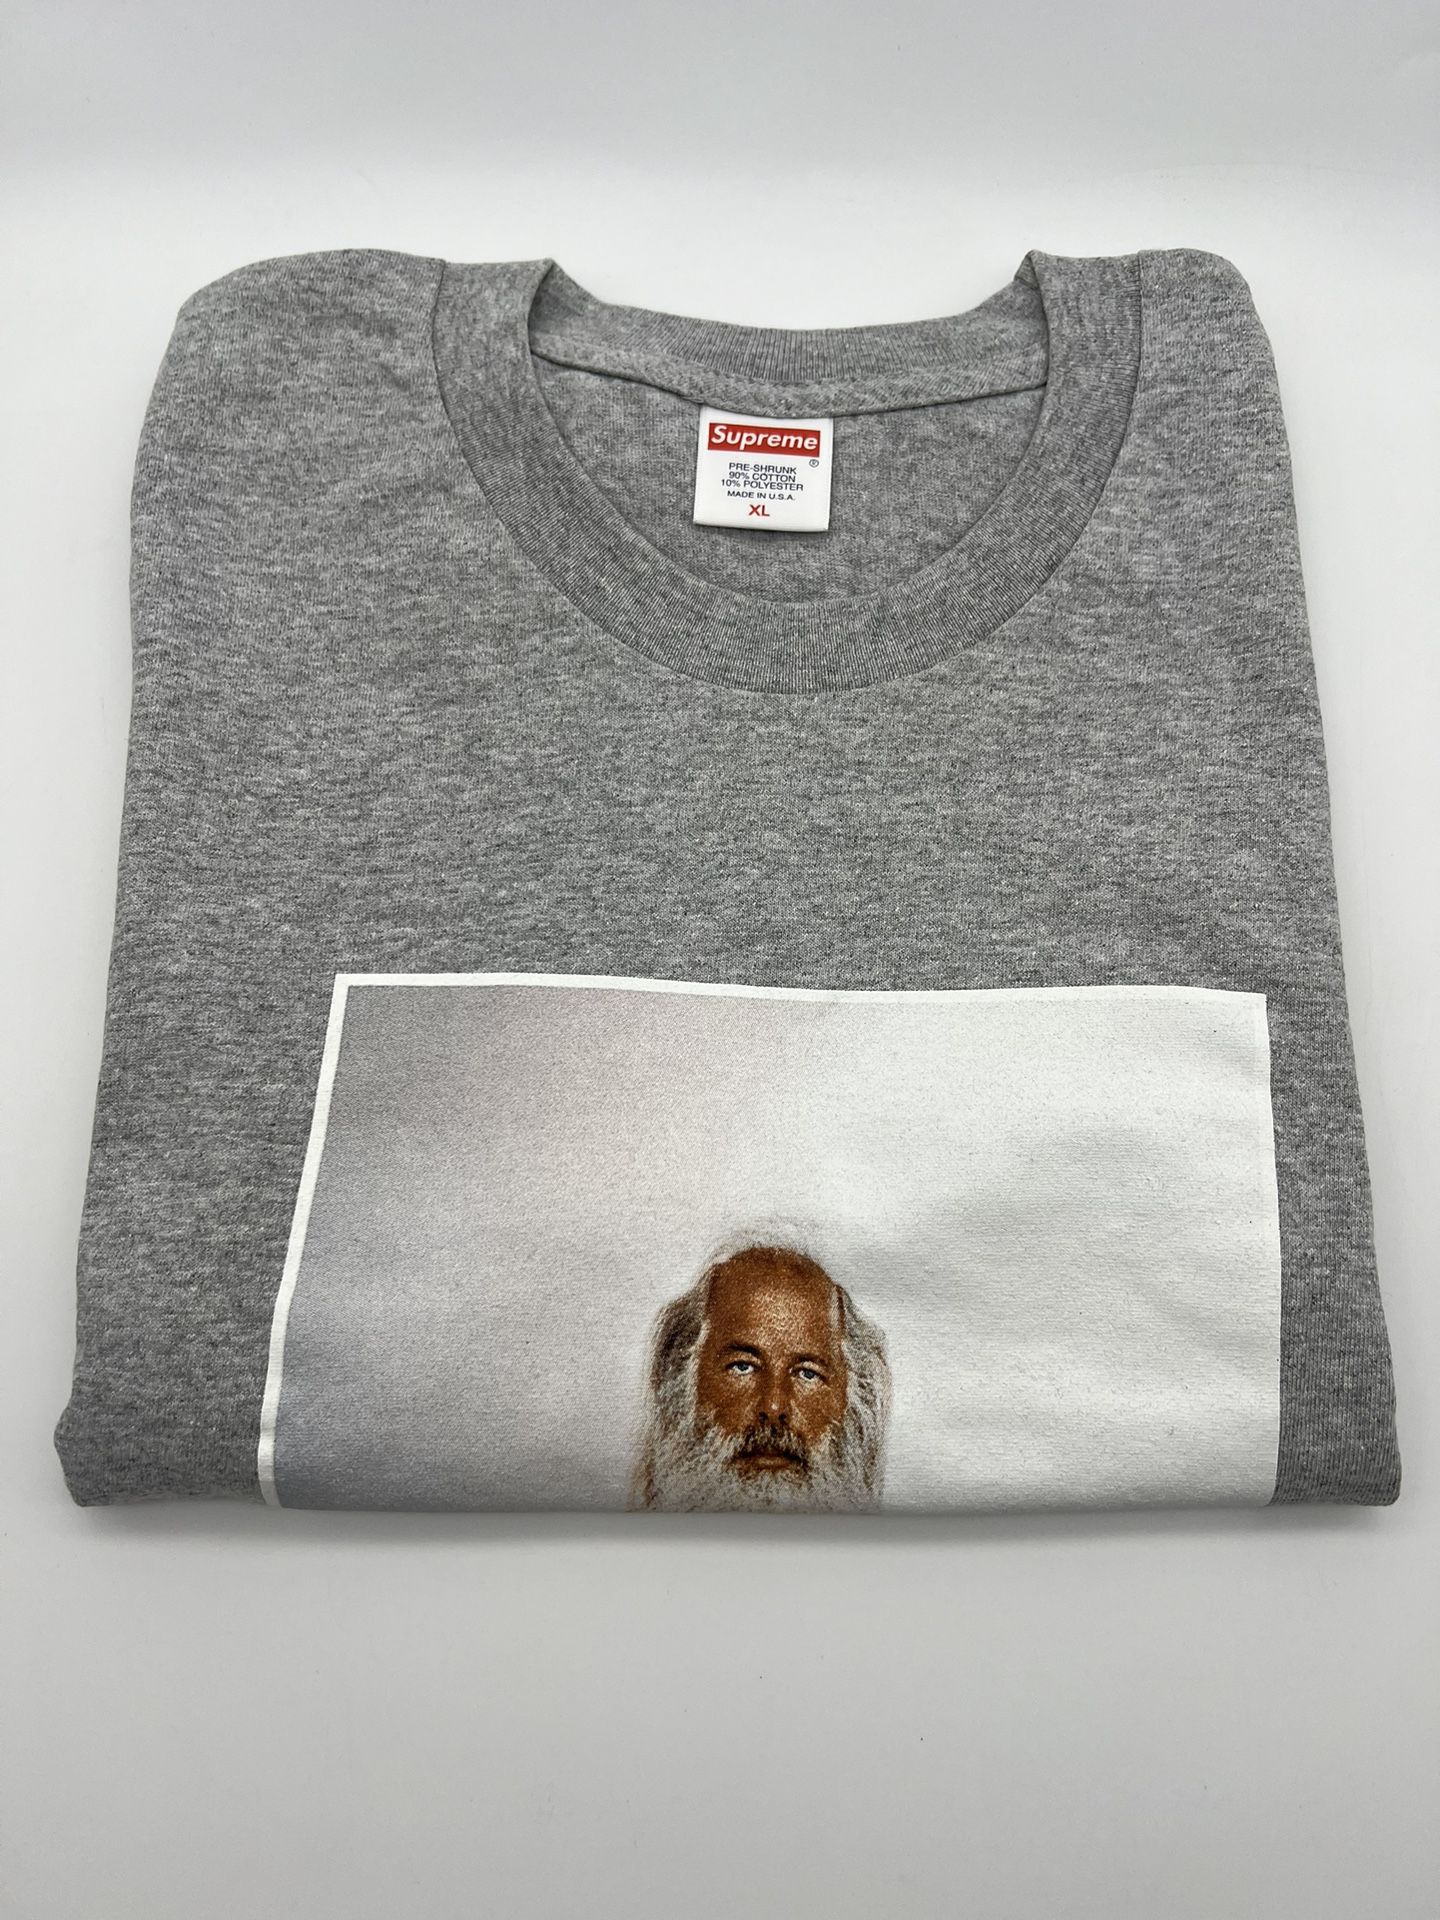 Supreme Rick Rubin Tee T-Shirt Gray - Sz XL - Fall/Winter 2021 - Tried On